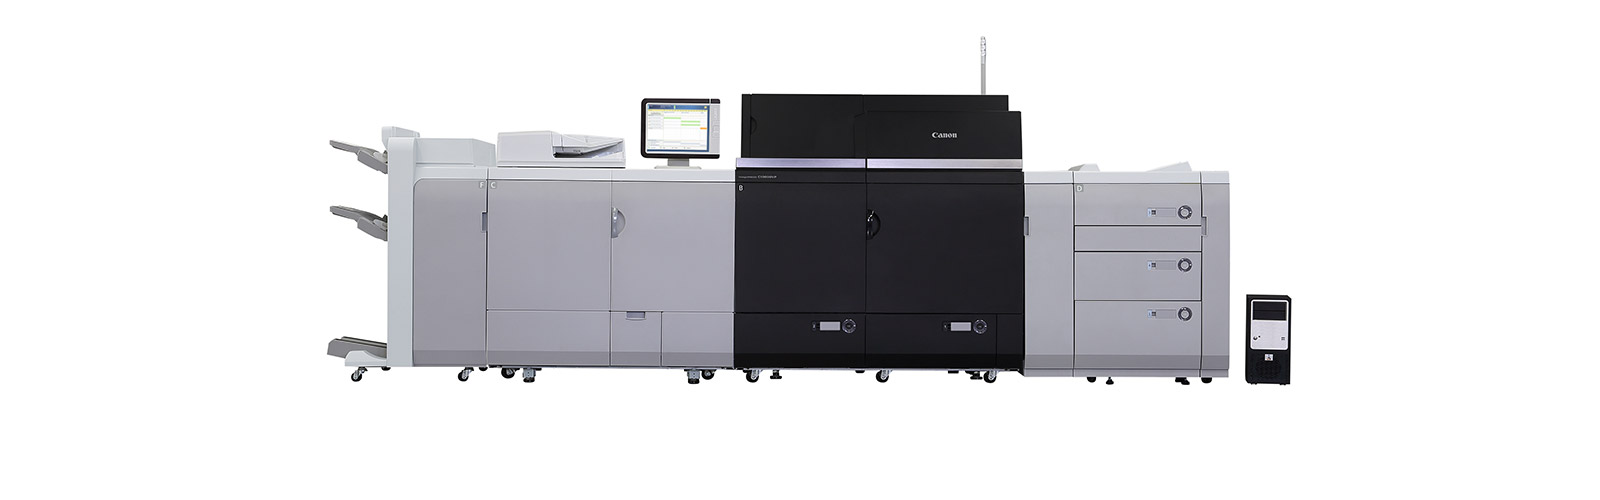 Canon imagePRESS C8000VP Production Print System